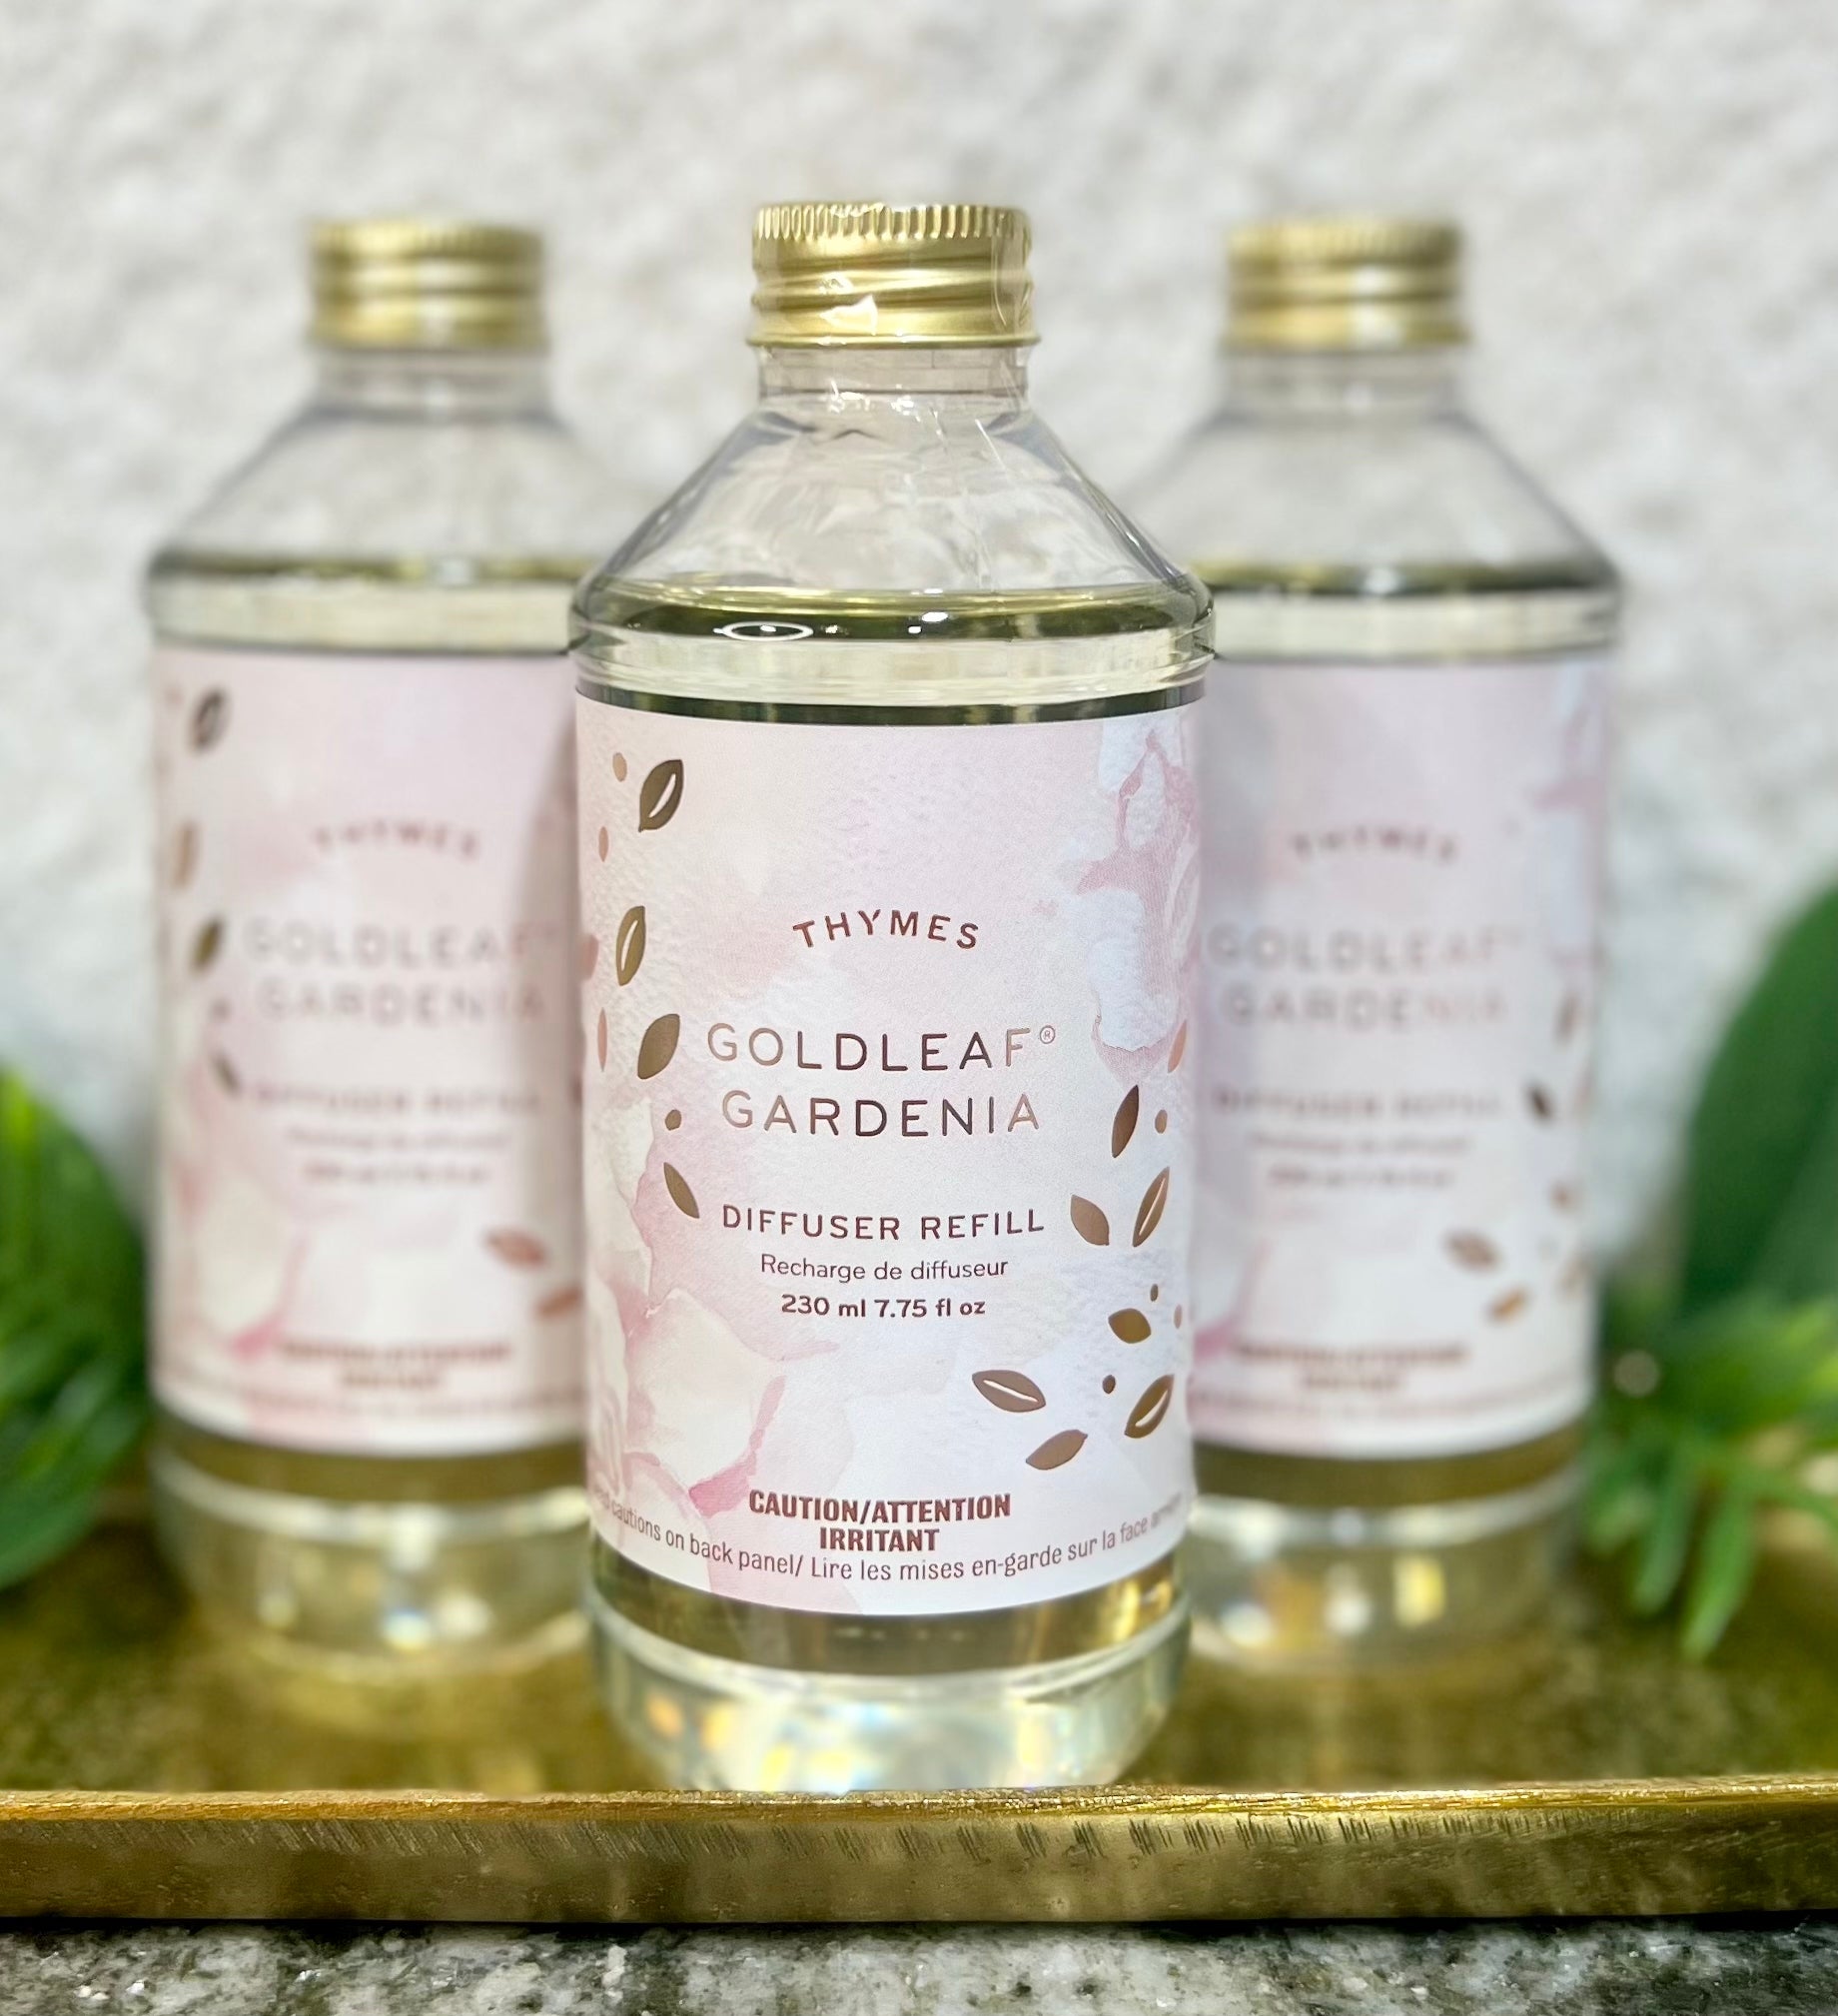 Thymes “Goldleaf Gardenia” oil diffuser refill